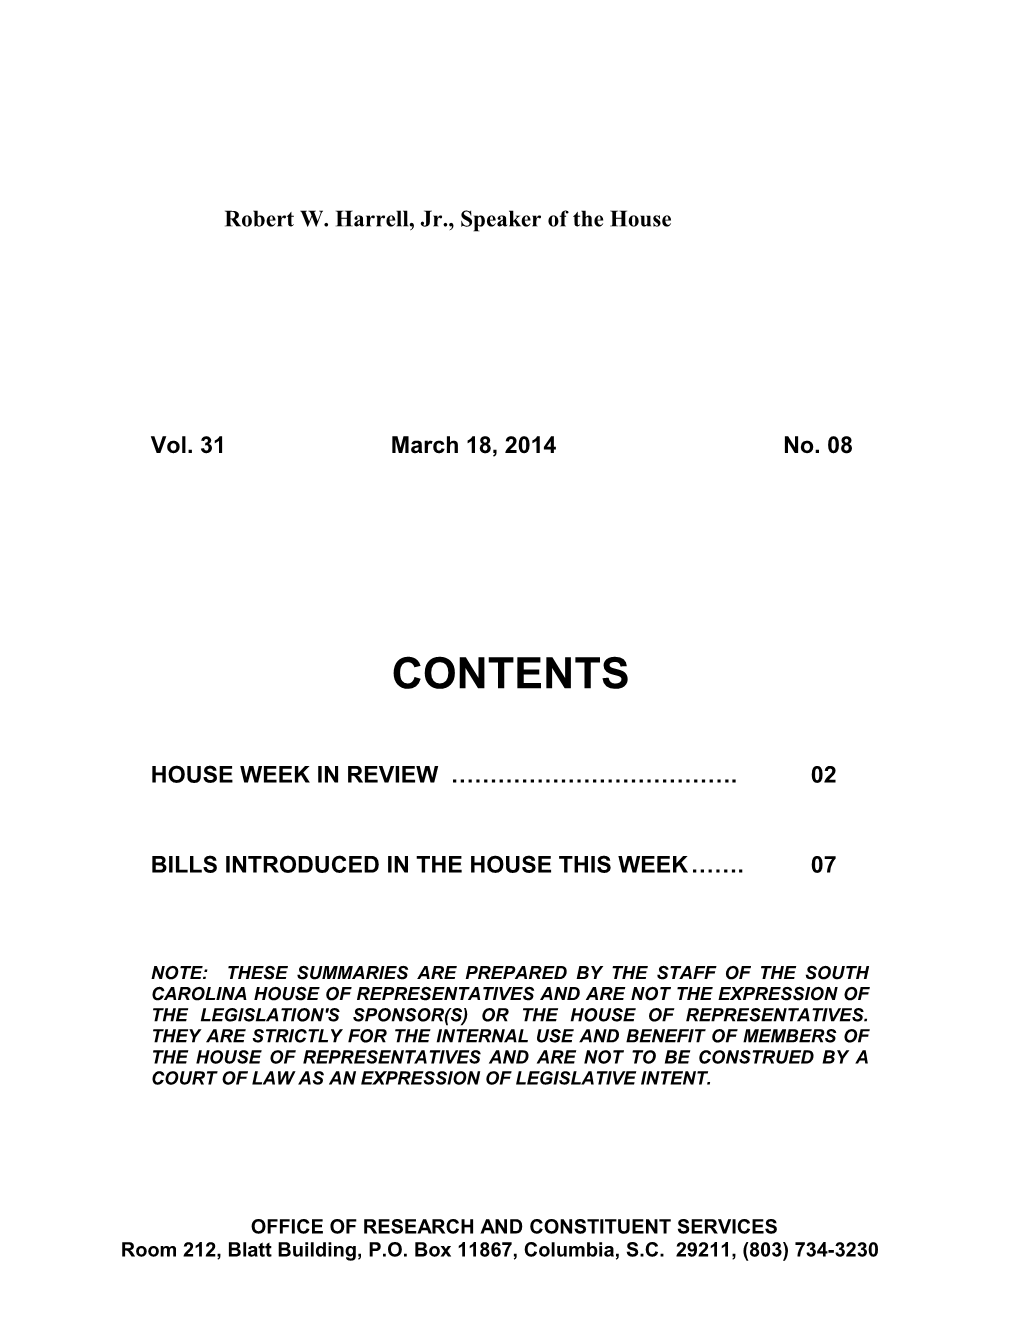 Legislative Update - Vol. 31 No. 08 March 18, 2014 - South Carolina Legislature Online